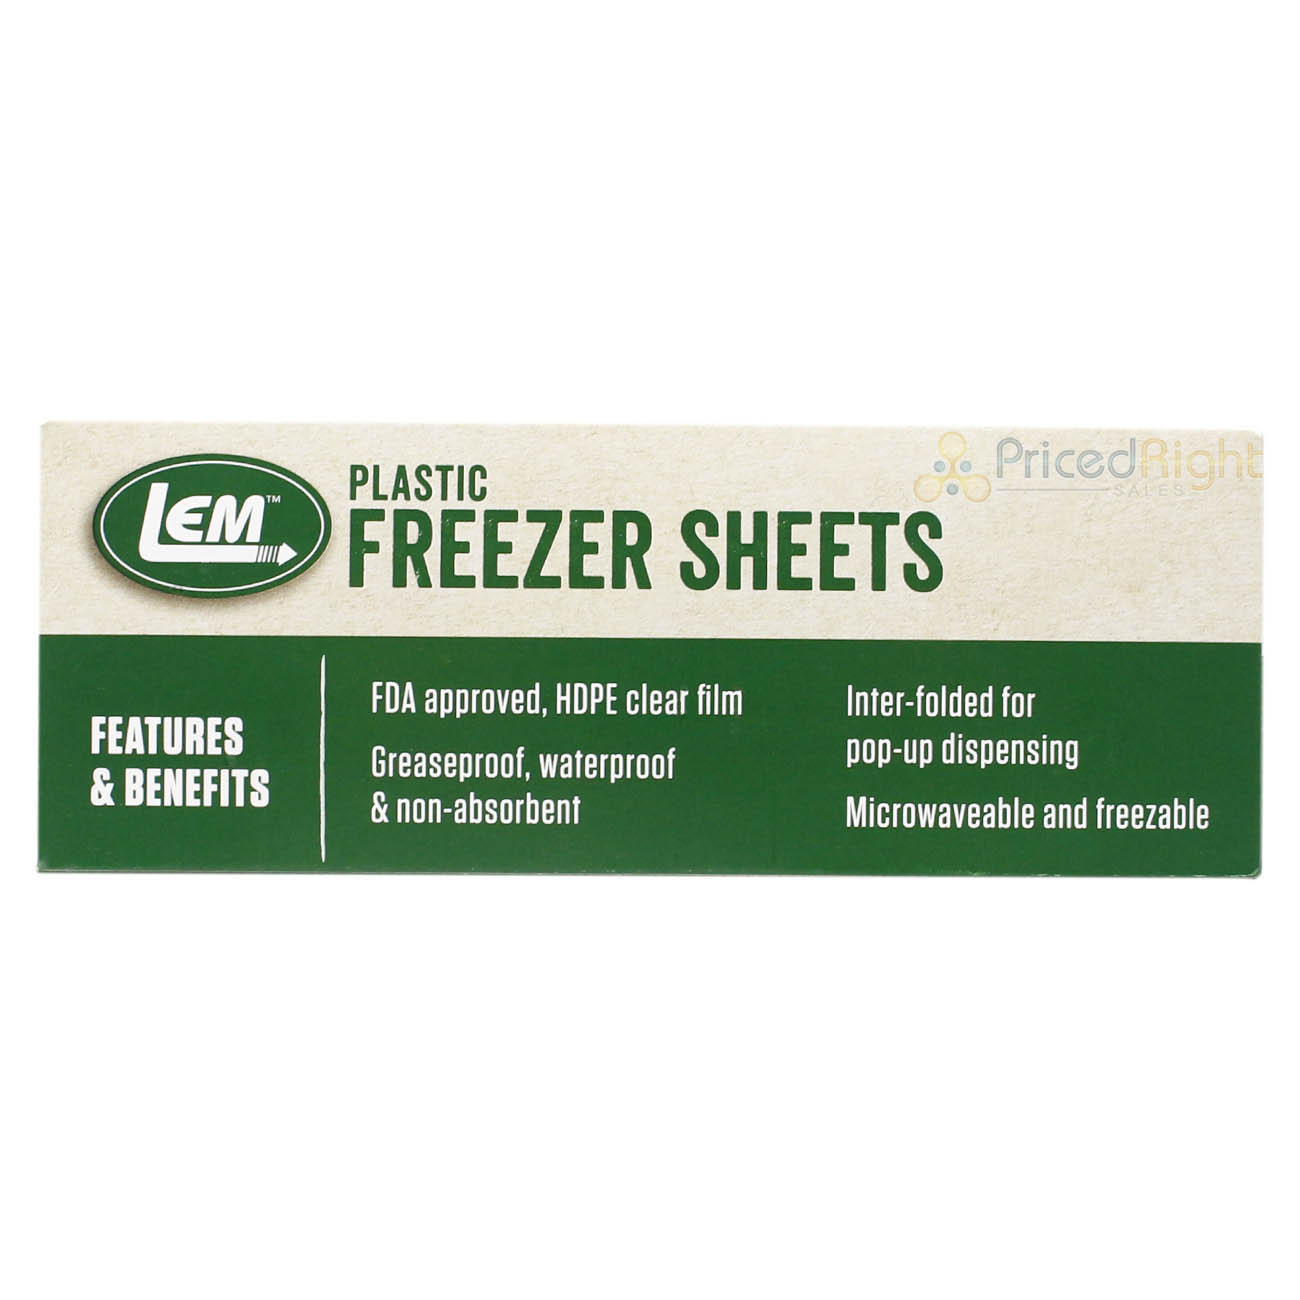 LEM 1000 Count 6"x10.75" Plastic Freezer Sheets FDA Approved Microwave Safe 027A